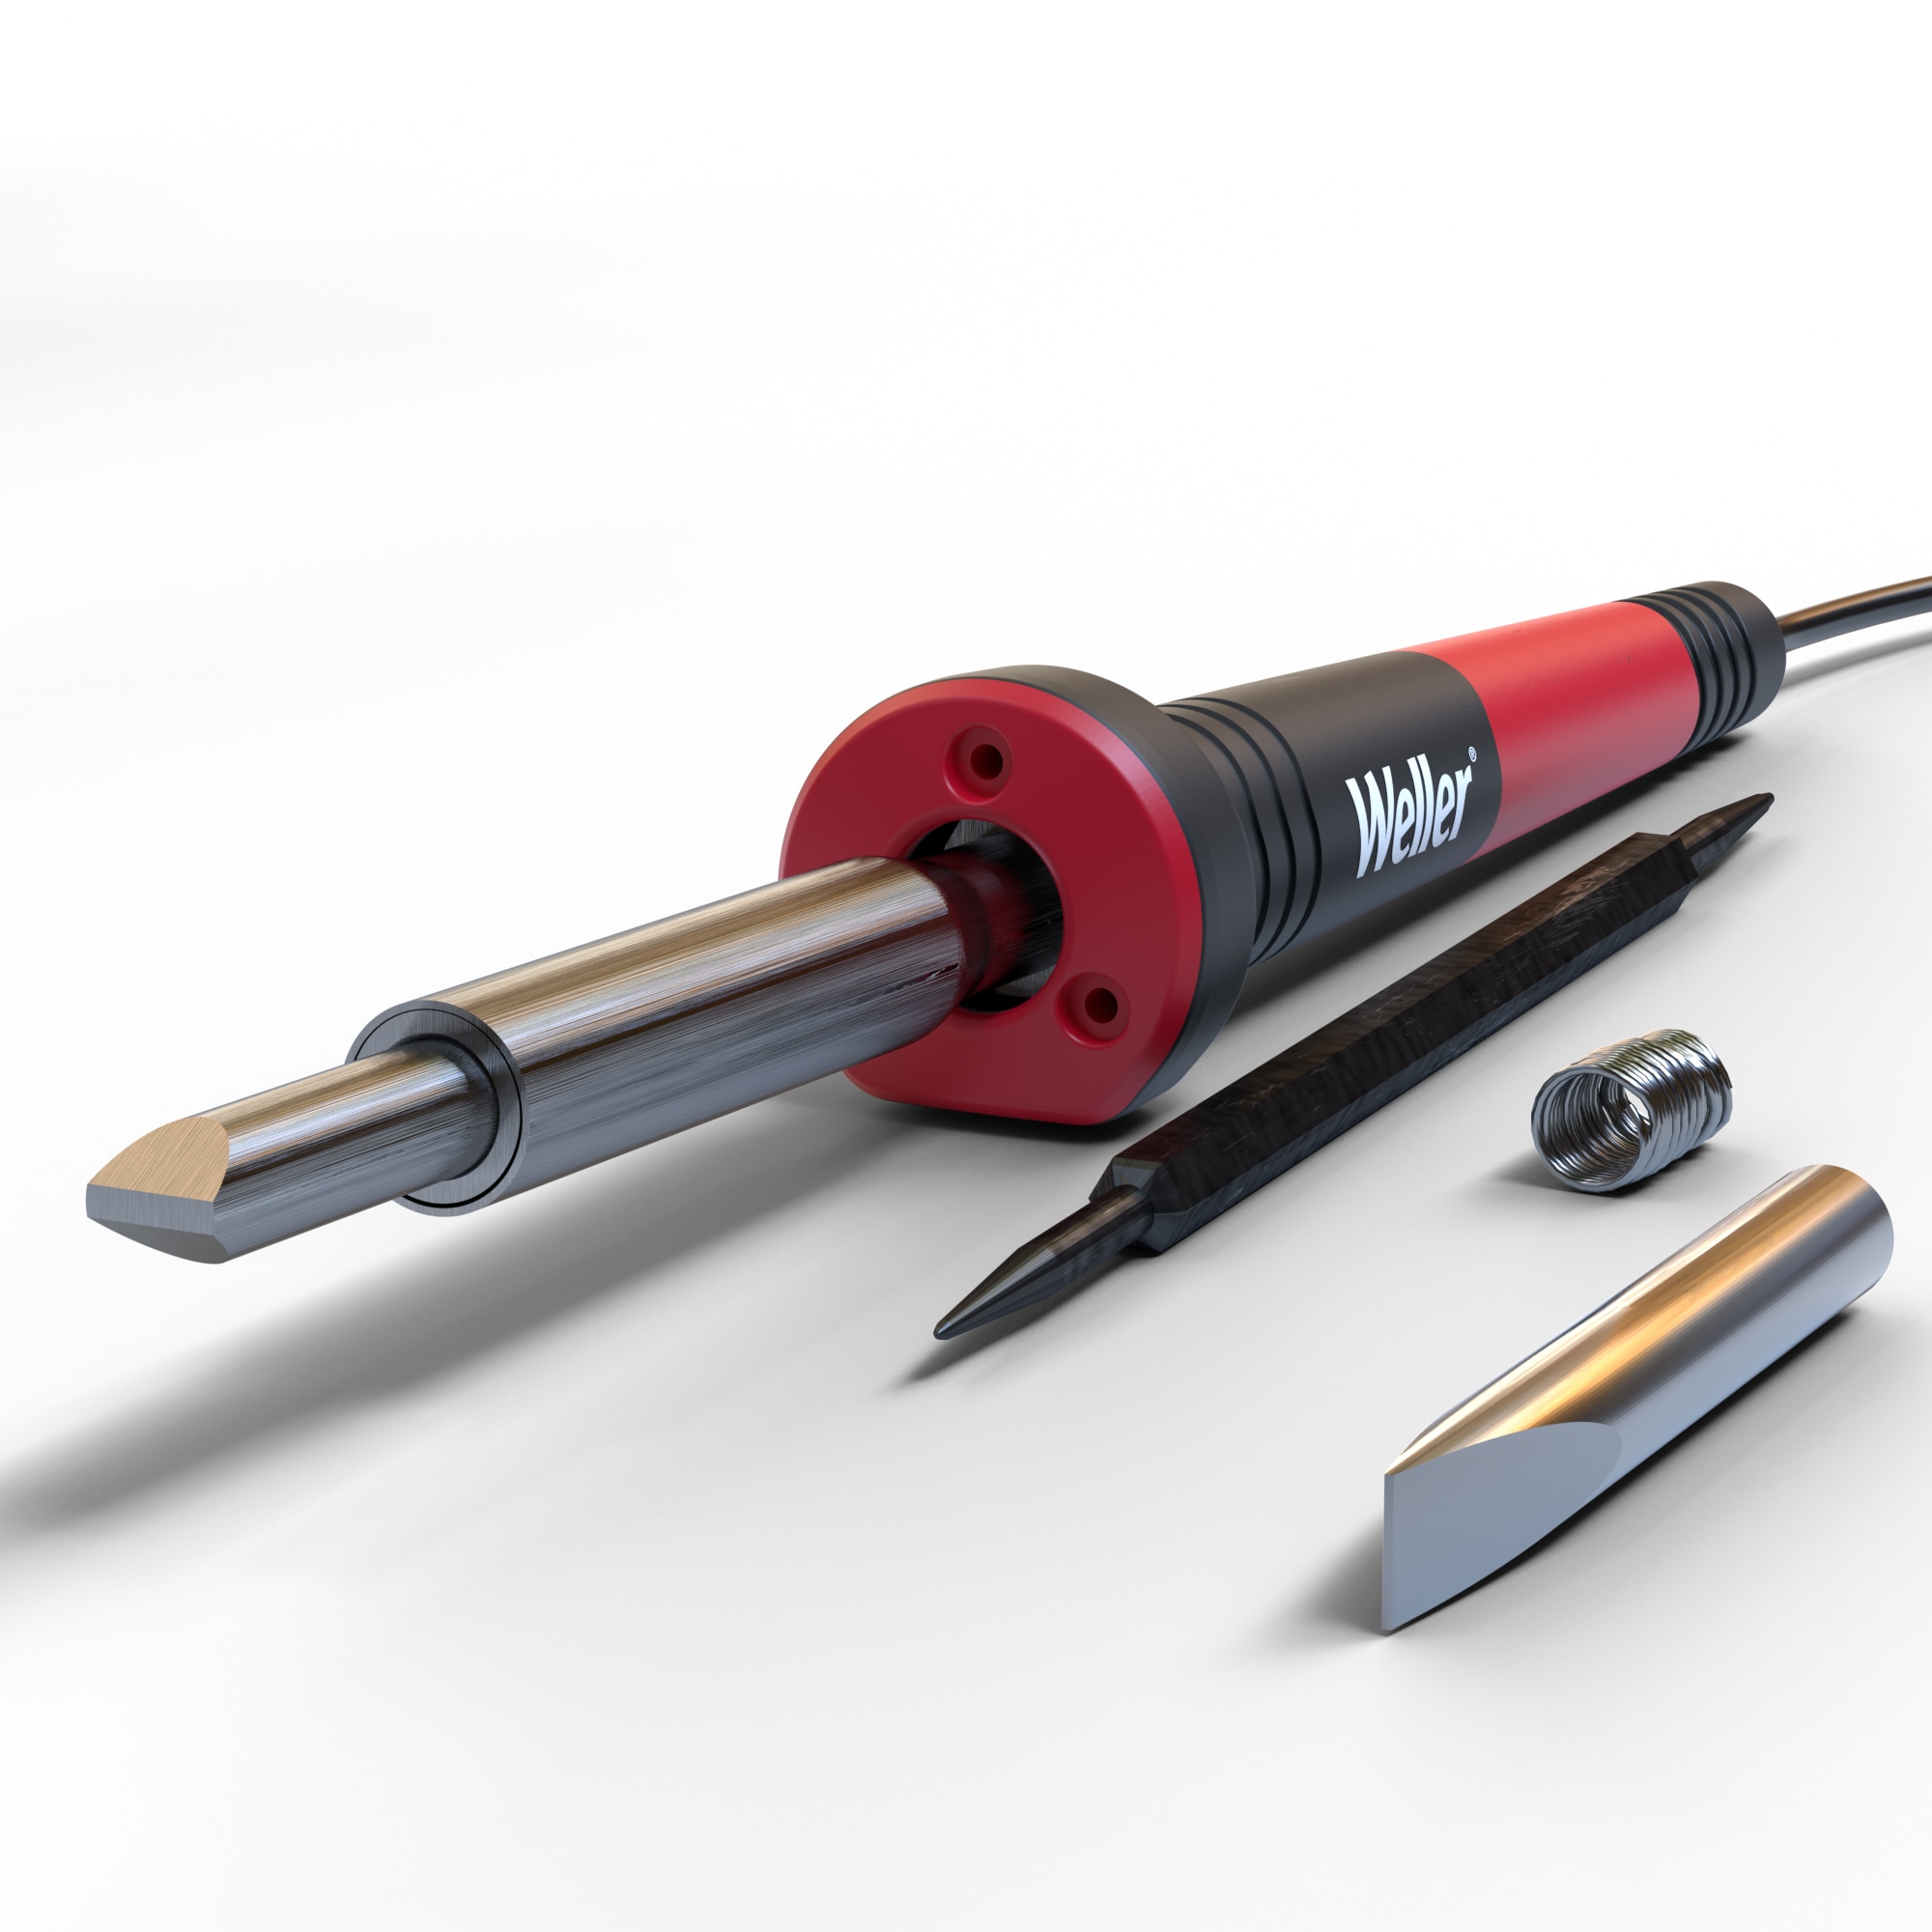  Ram-Pro Wood Burning Kit, Pyrography Leather & Soldering Pen  Tool Set